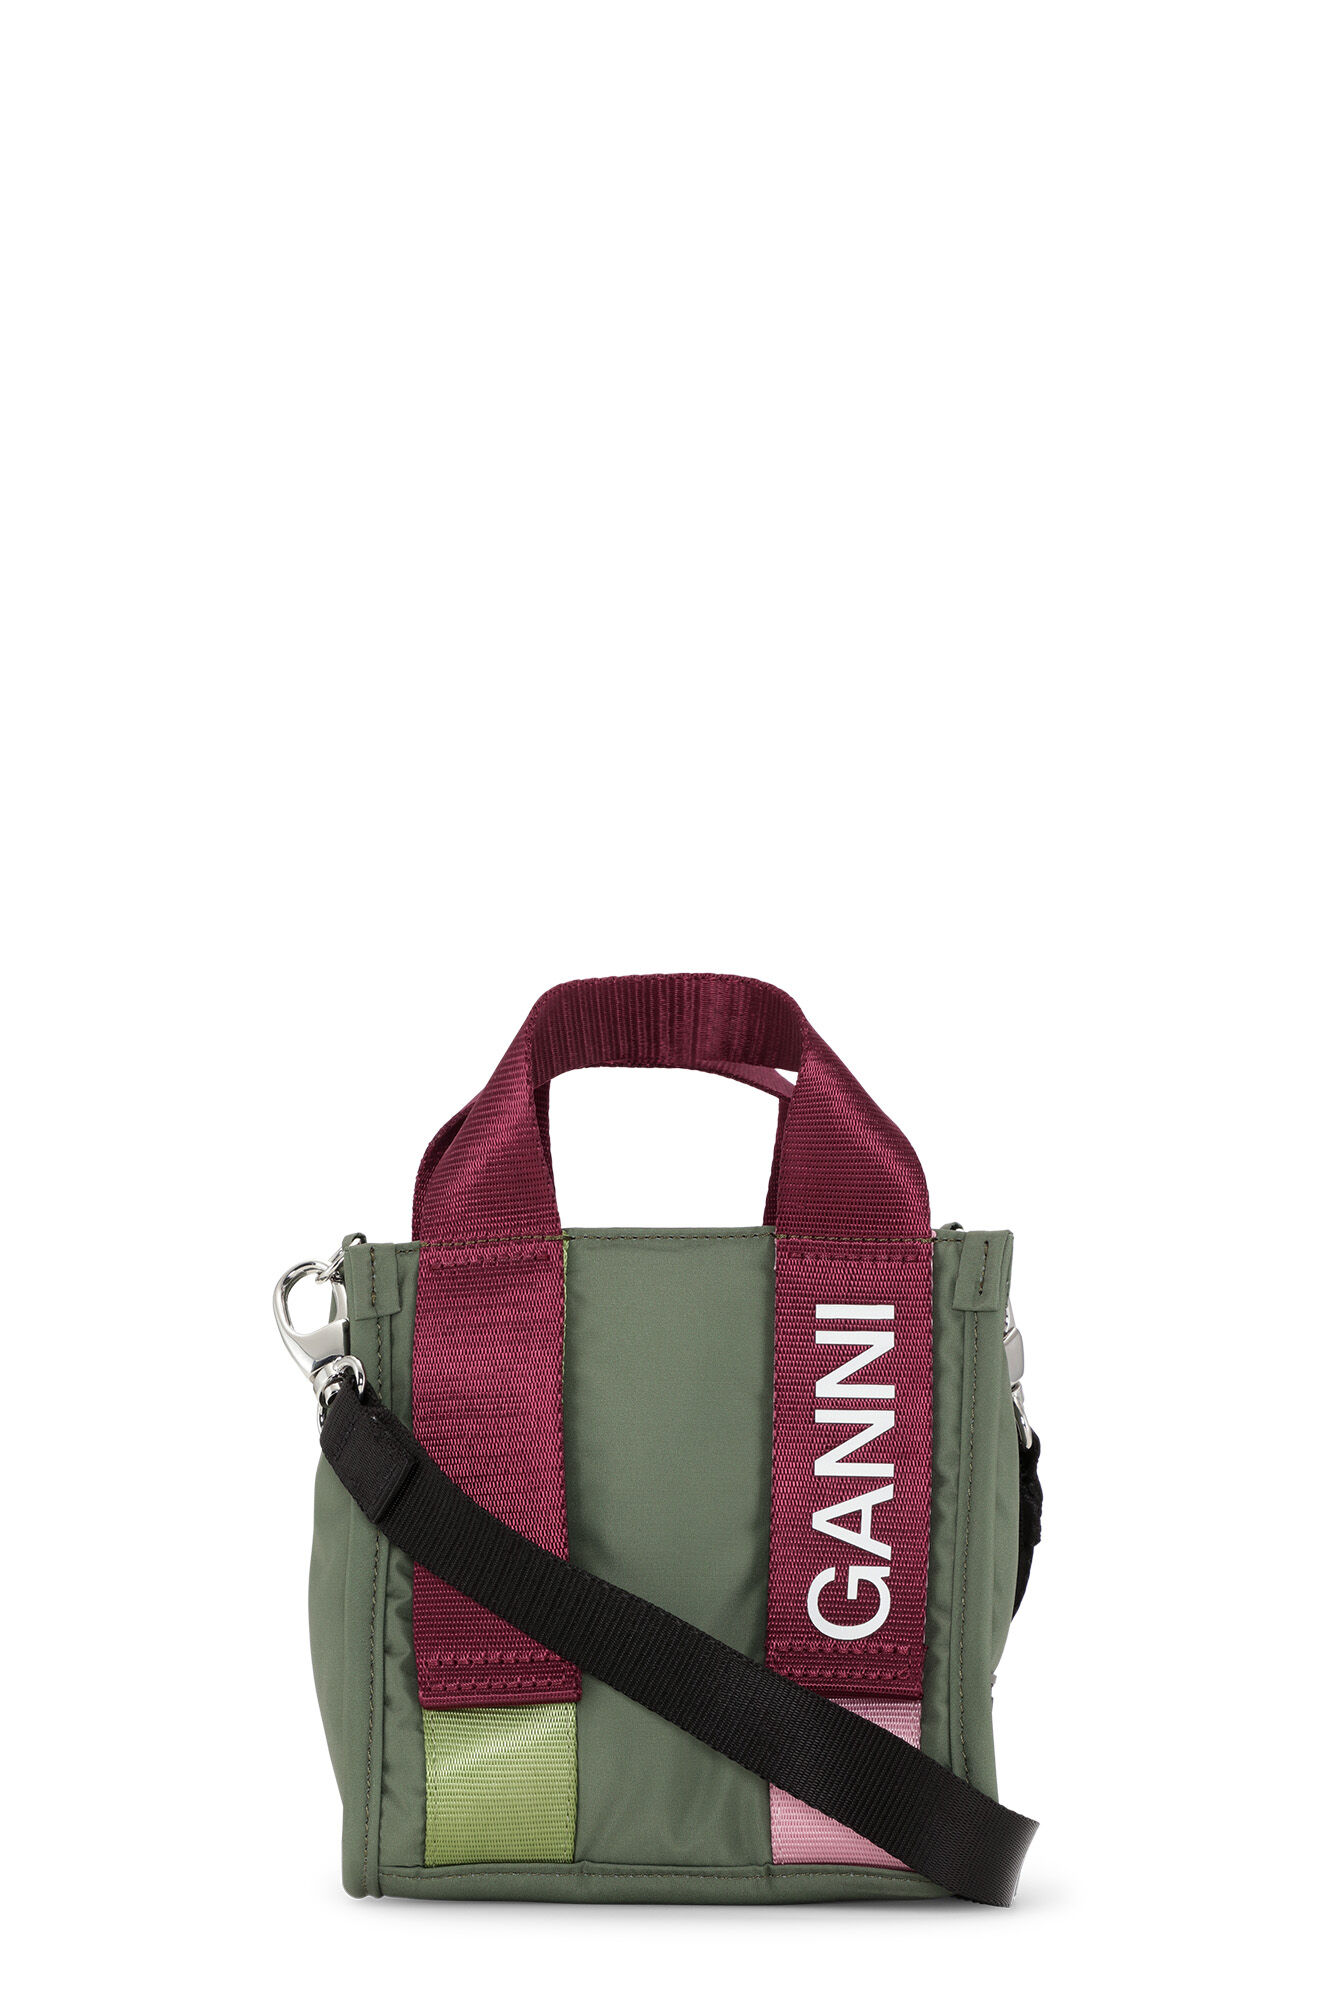 Ganni Women's Mini Tote Tech Military Green Bag